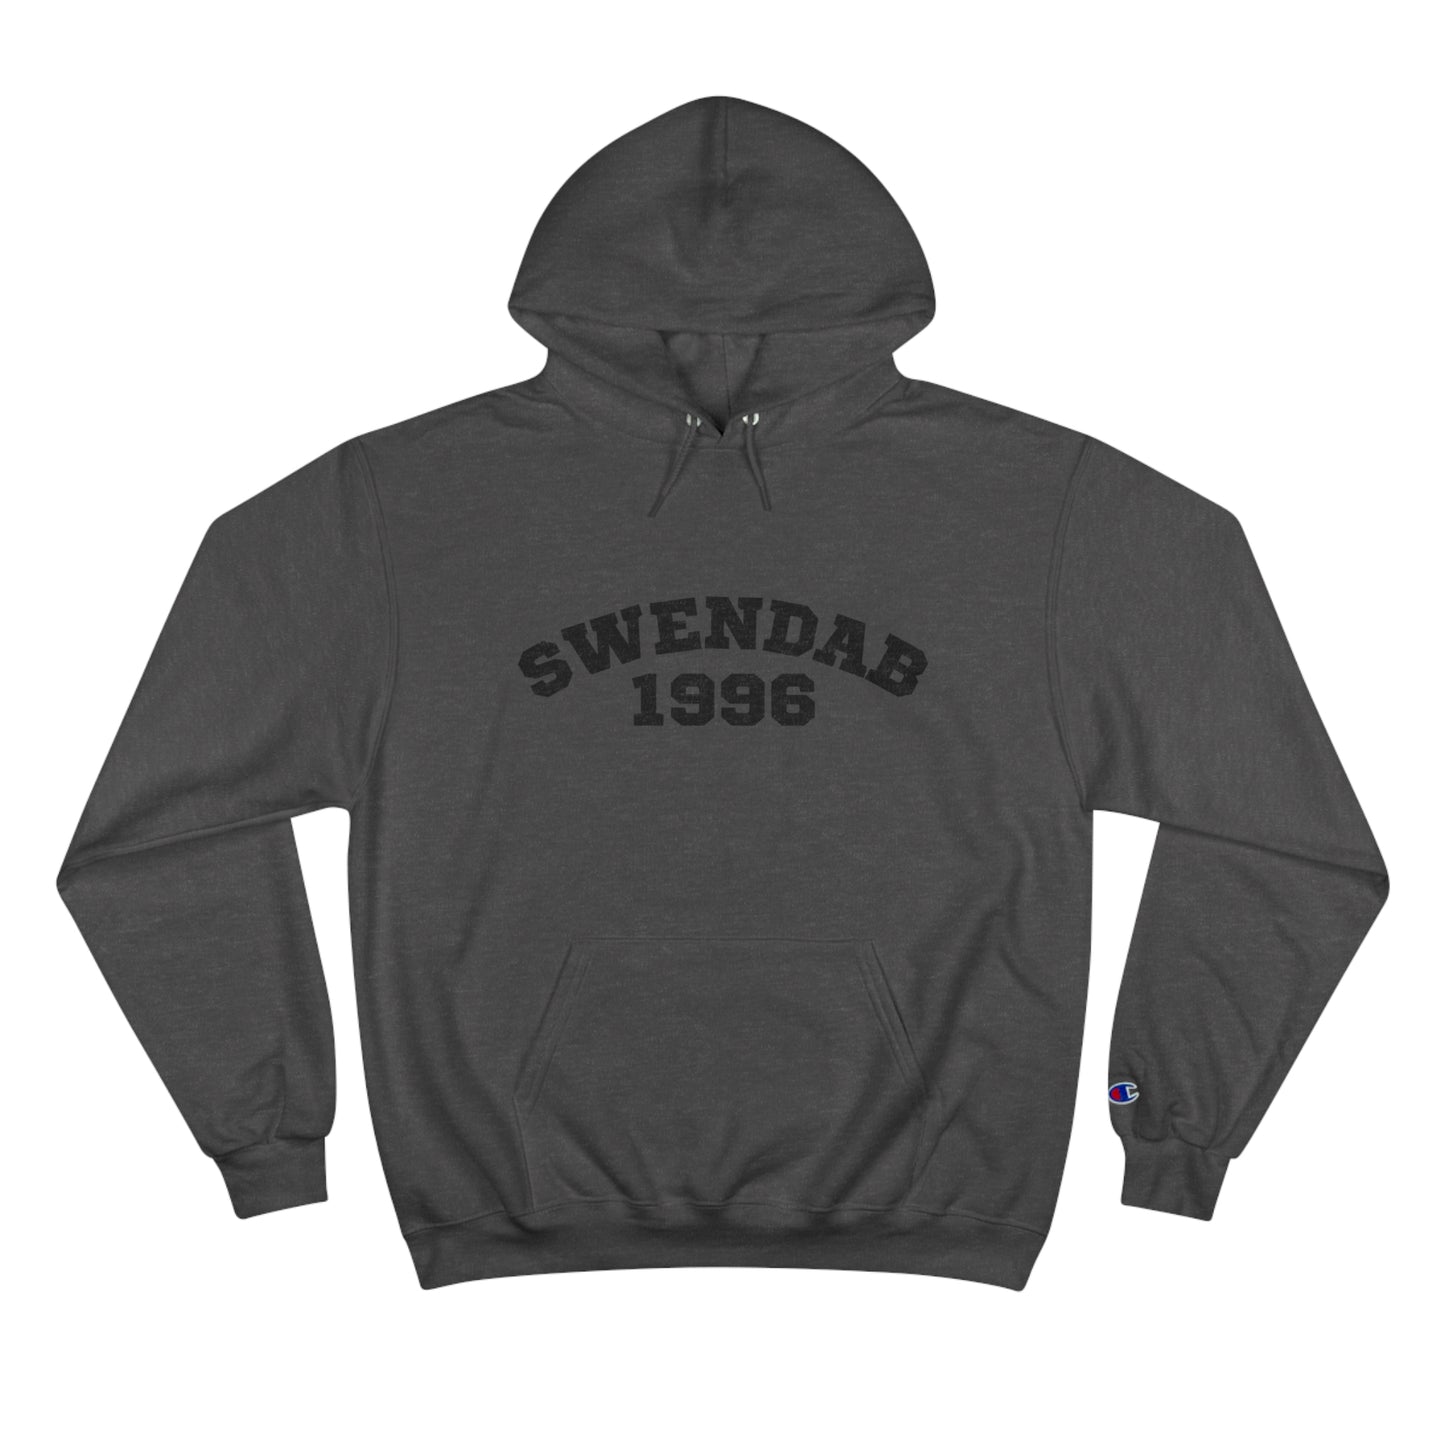 SWENDAB 1996 Champion Hoodie - SWENDAB